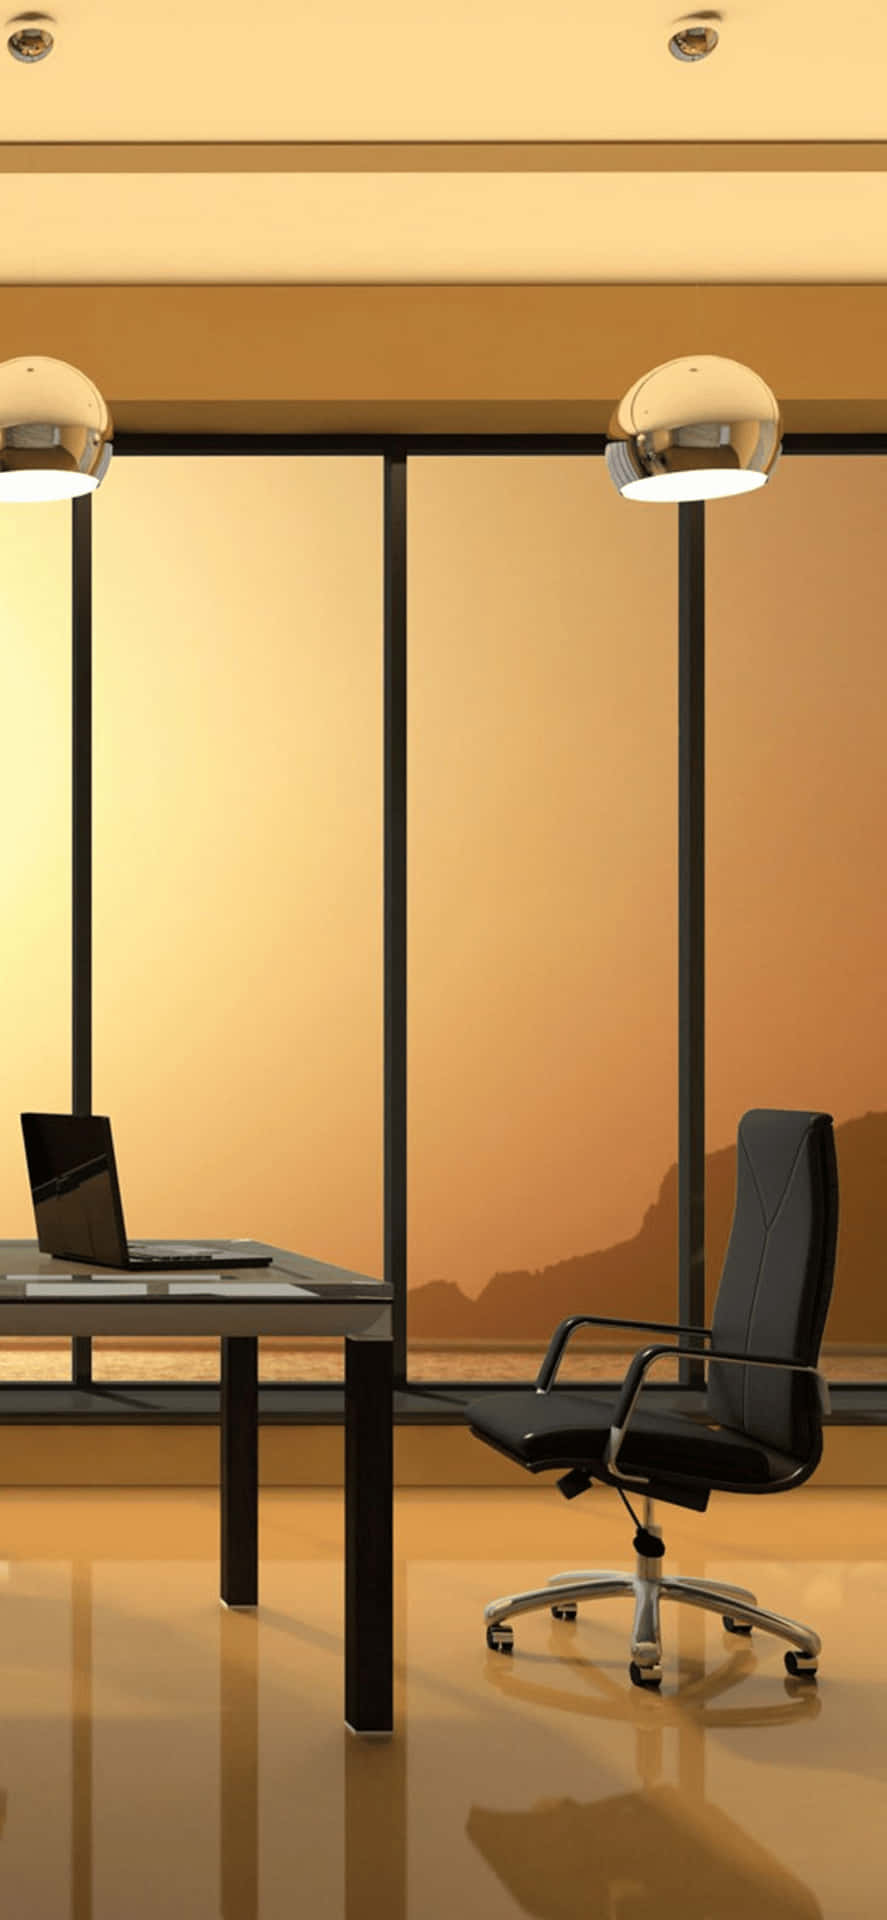 Sunset Windows iPhone X Office Background